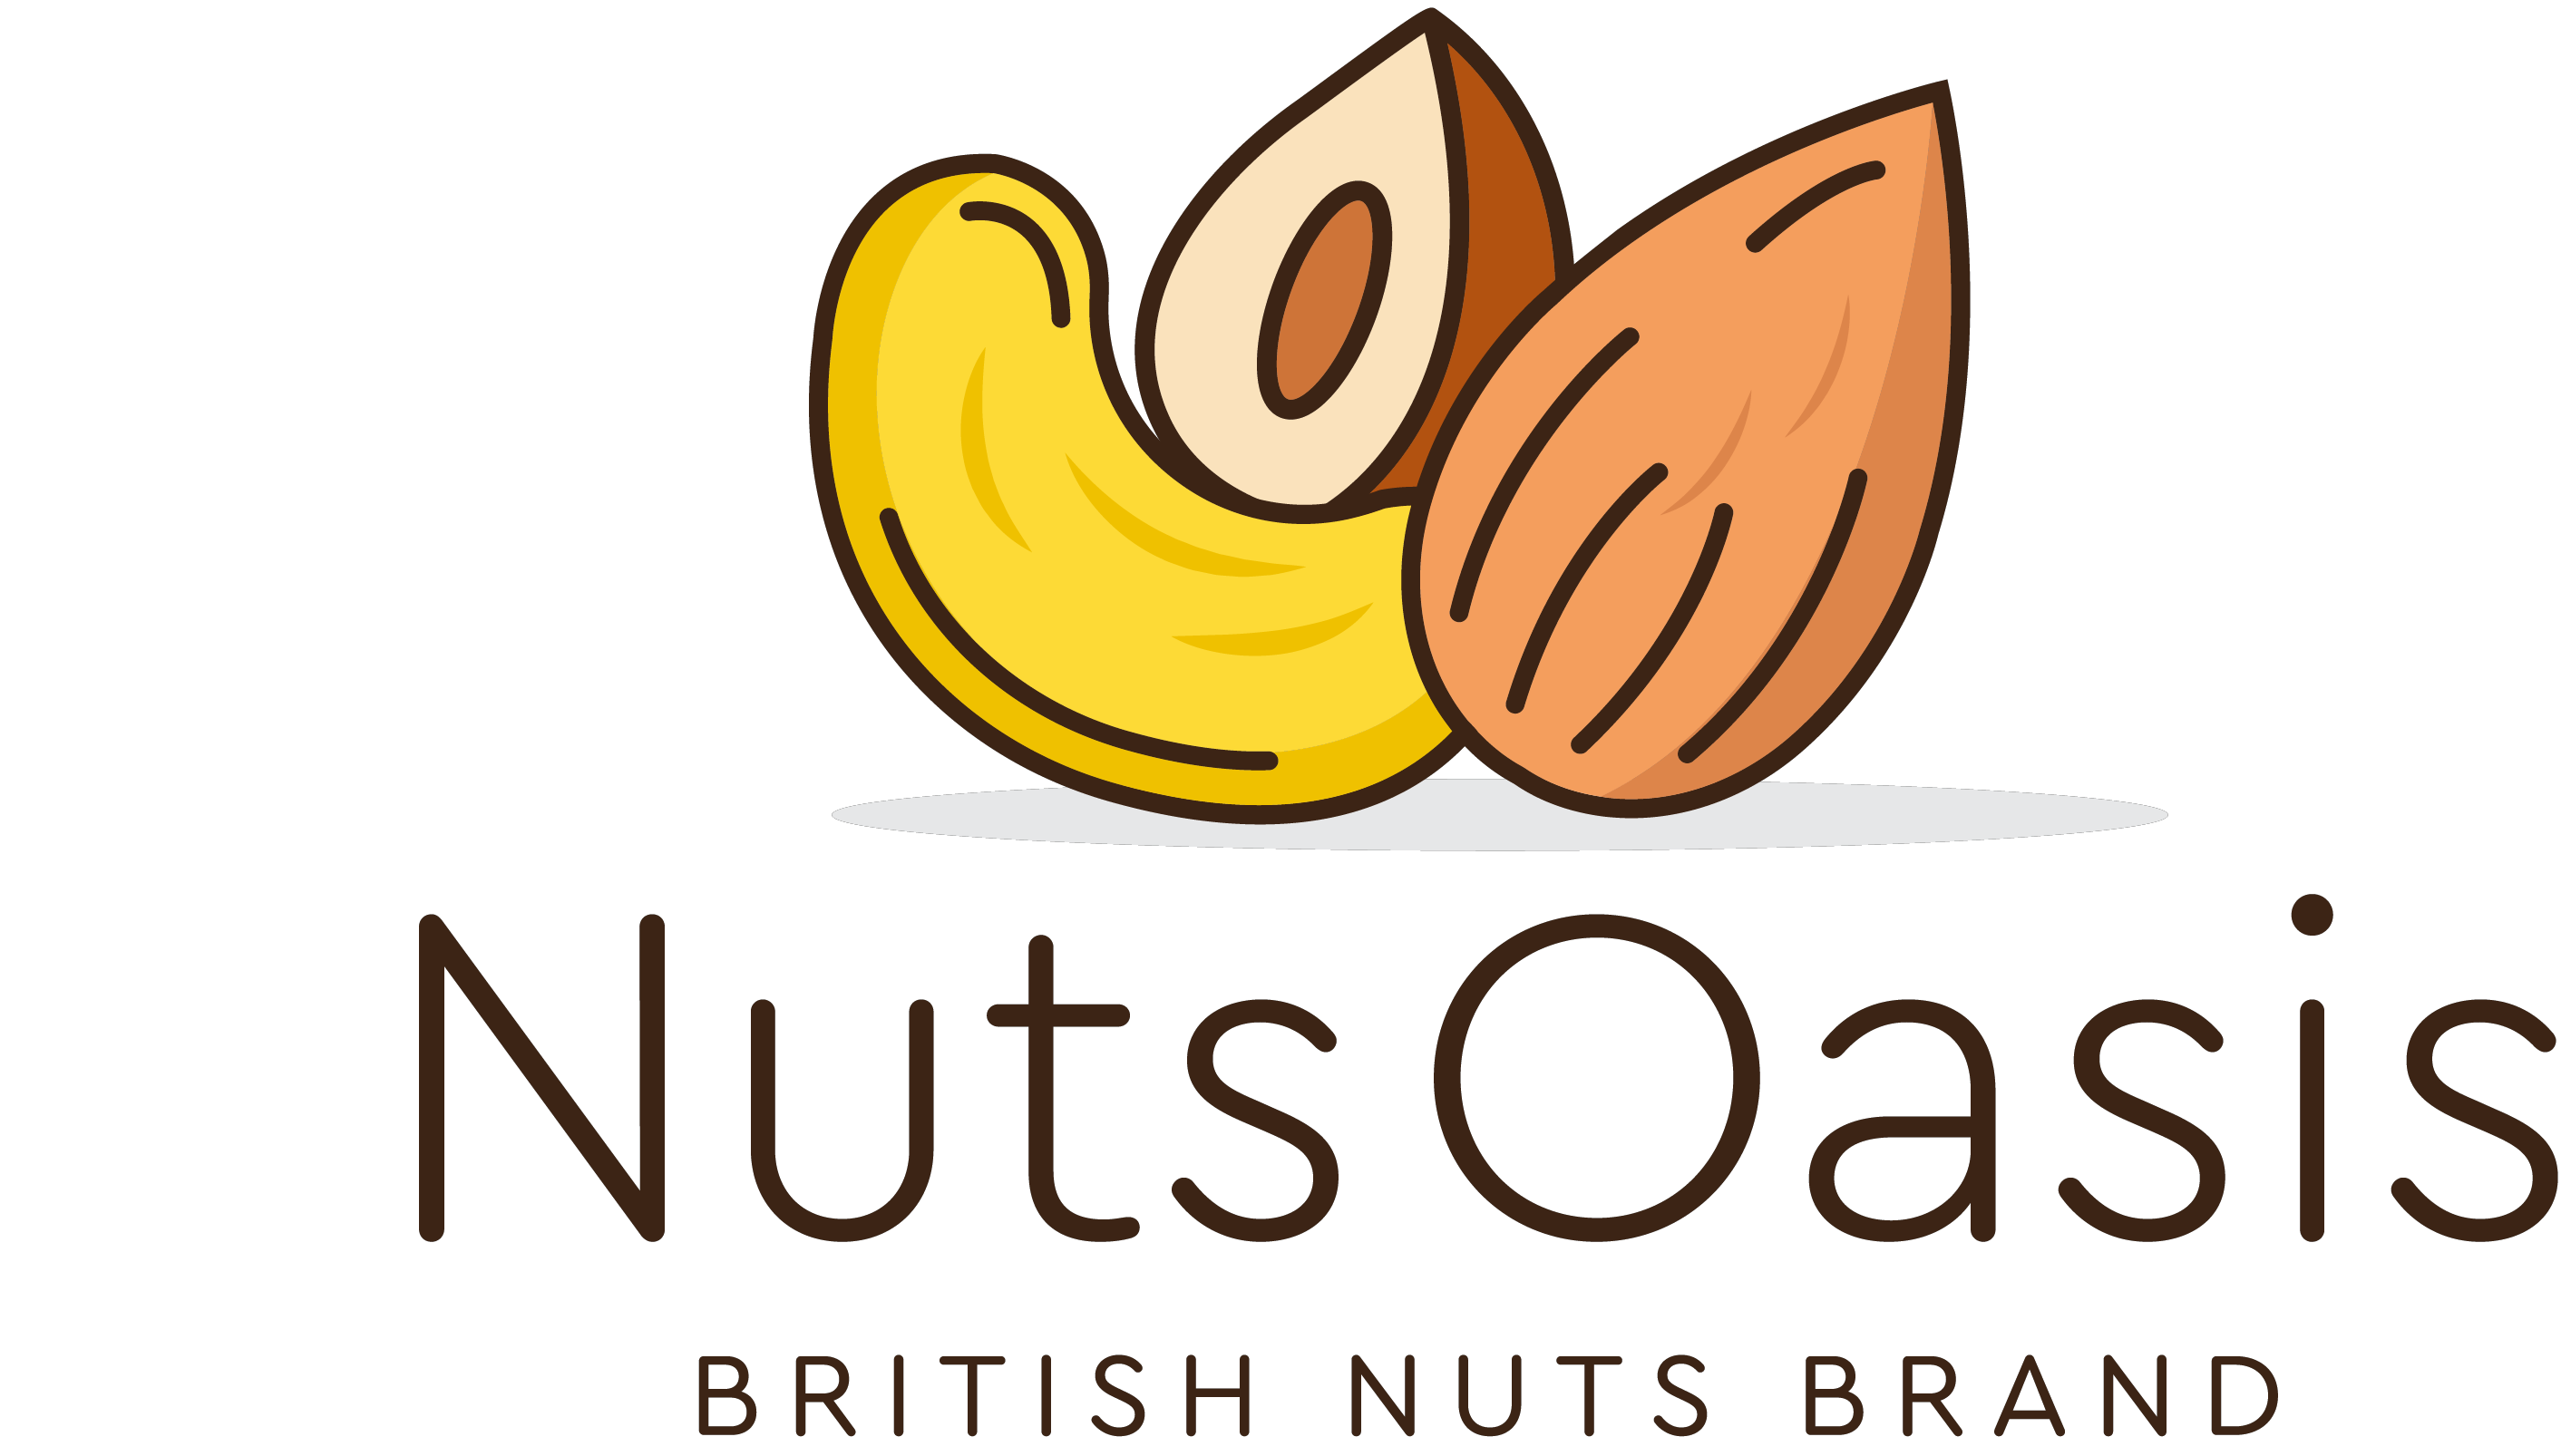 Nuts Oasis